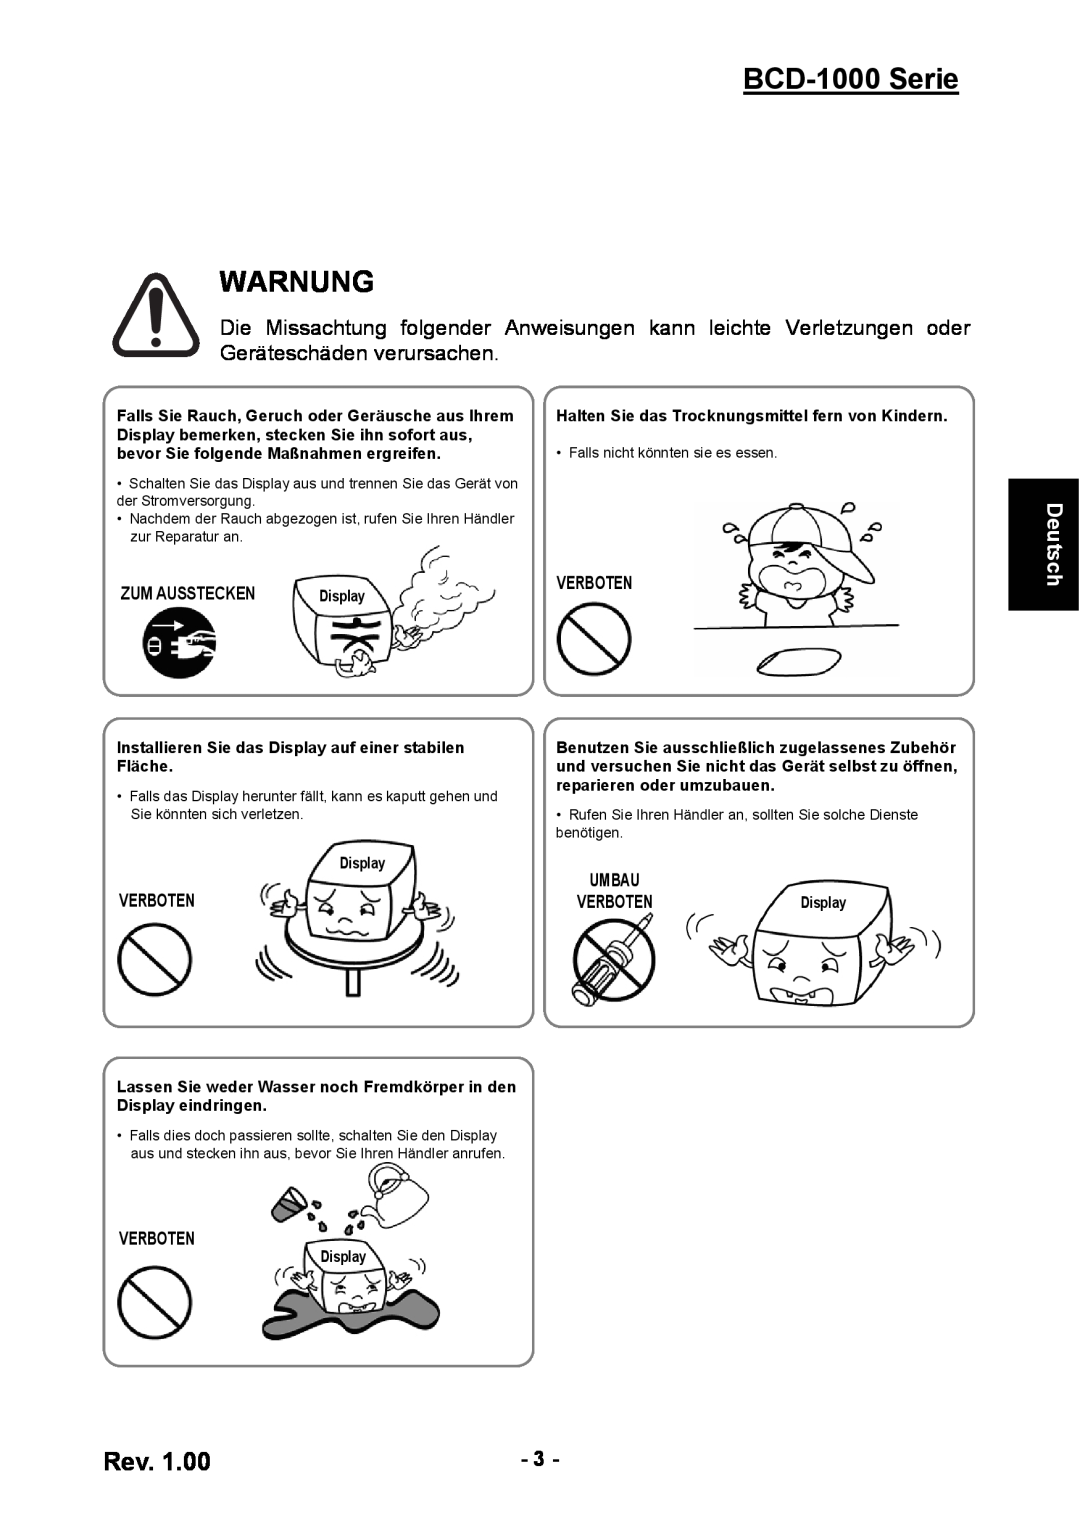 Samsung user manual BCD-1000 Serie WARNUNG, Deutsch, Zum Ausstecken, Verboten 